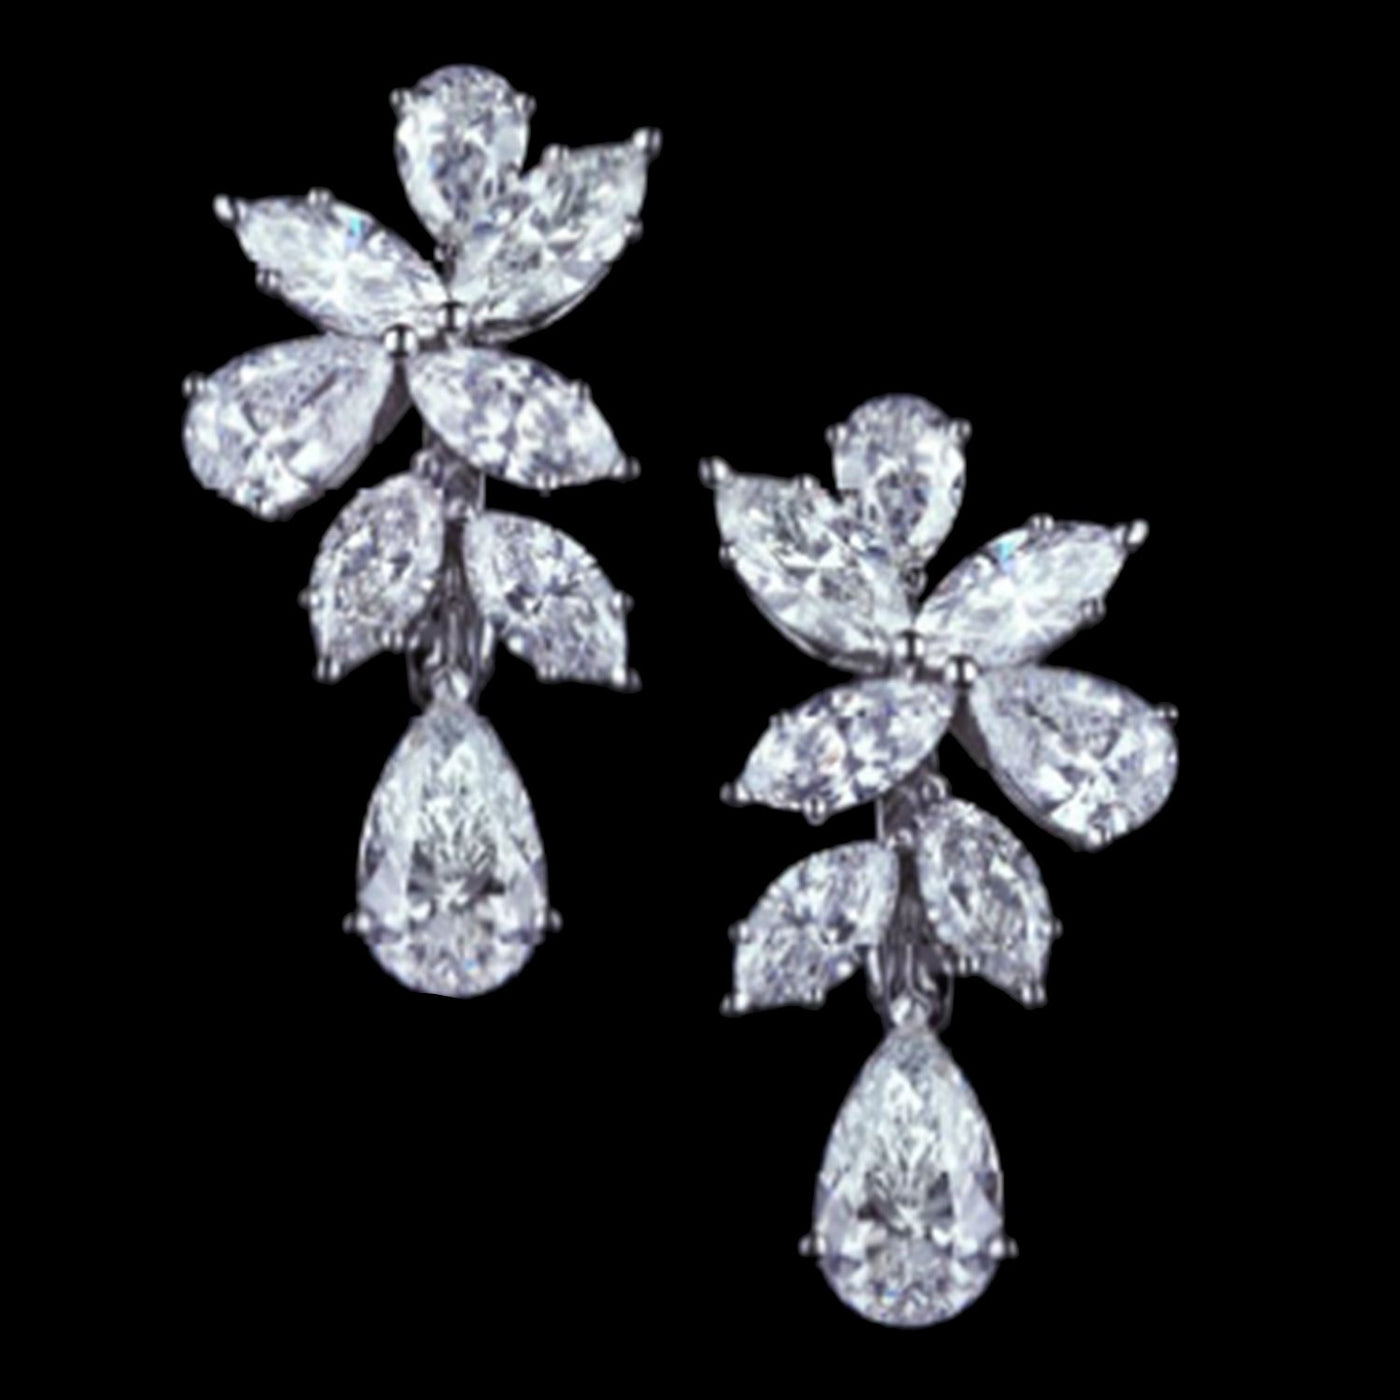 Kim's Diamond Earrings